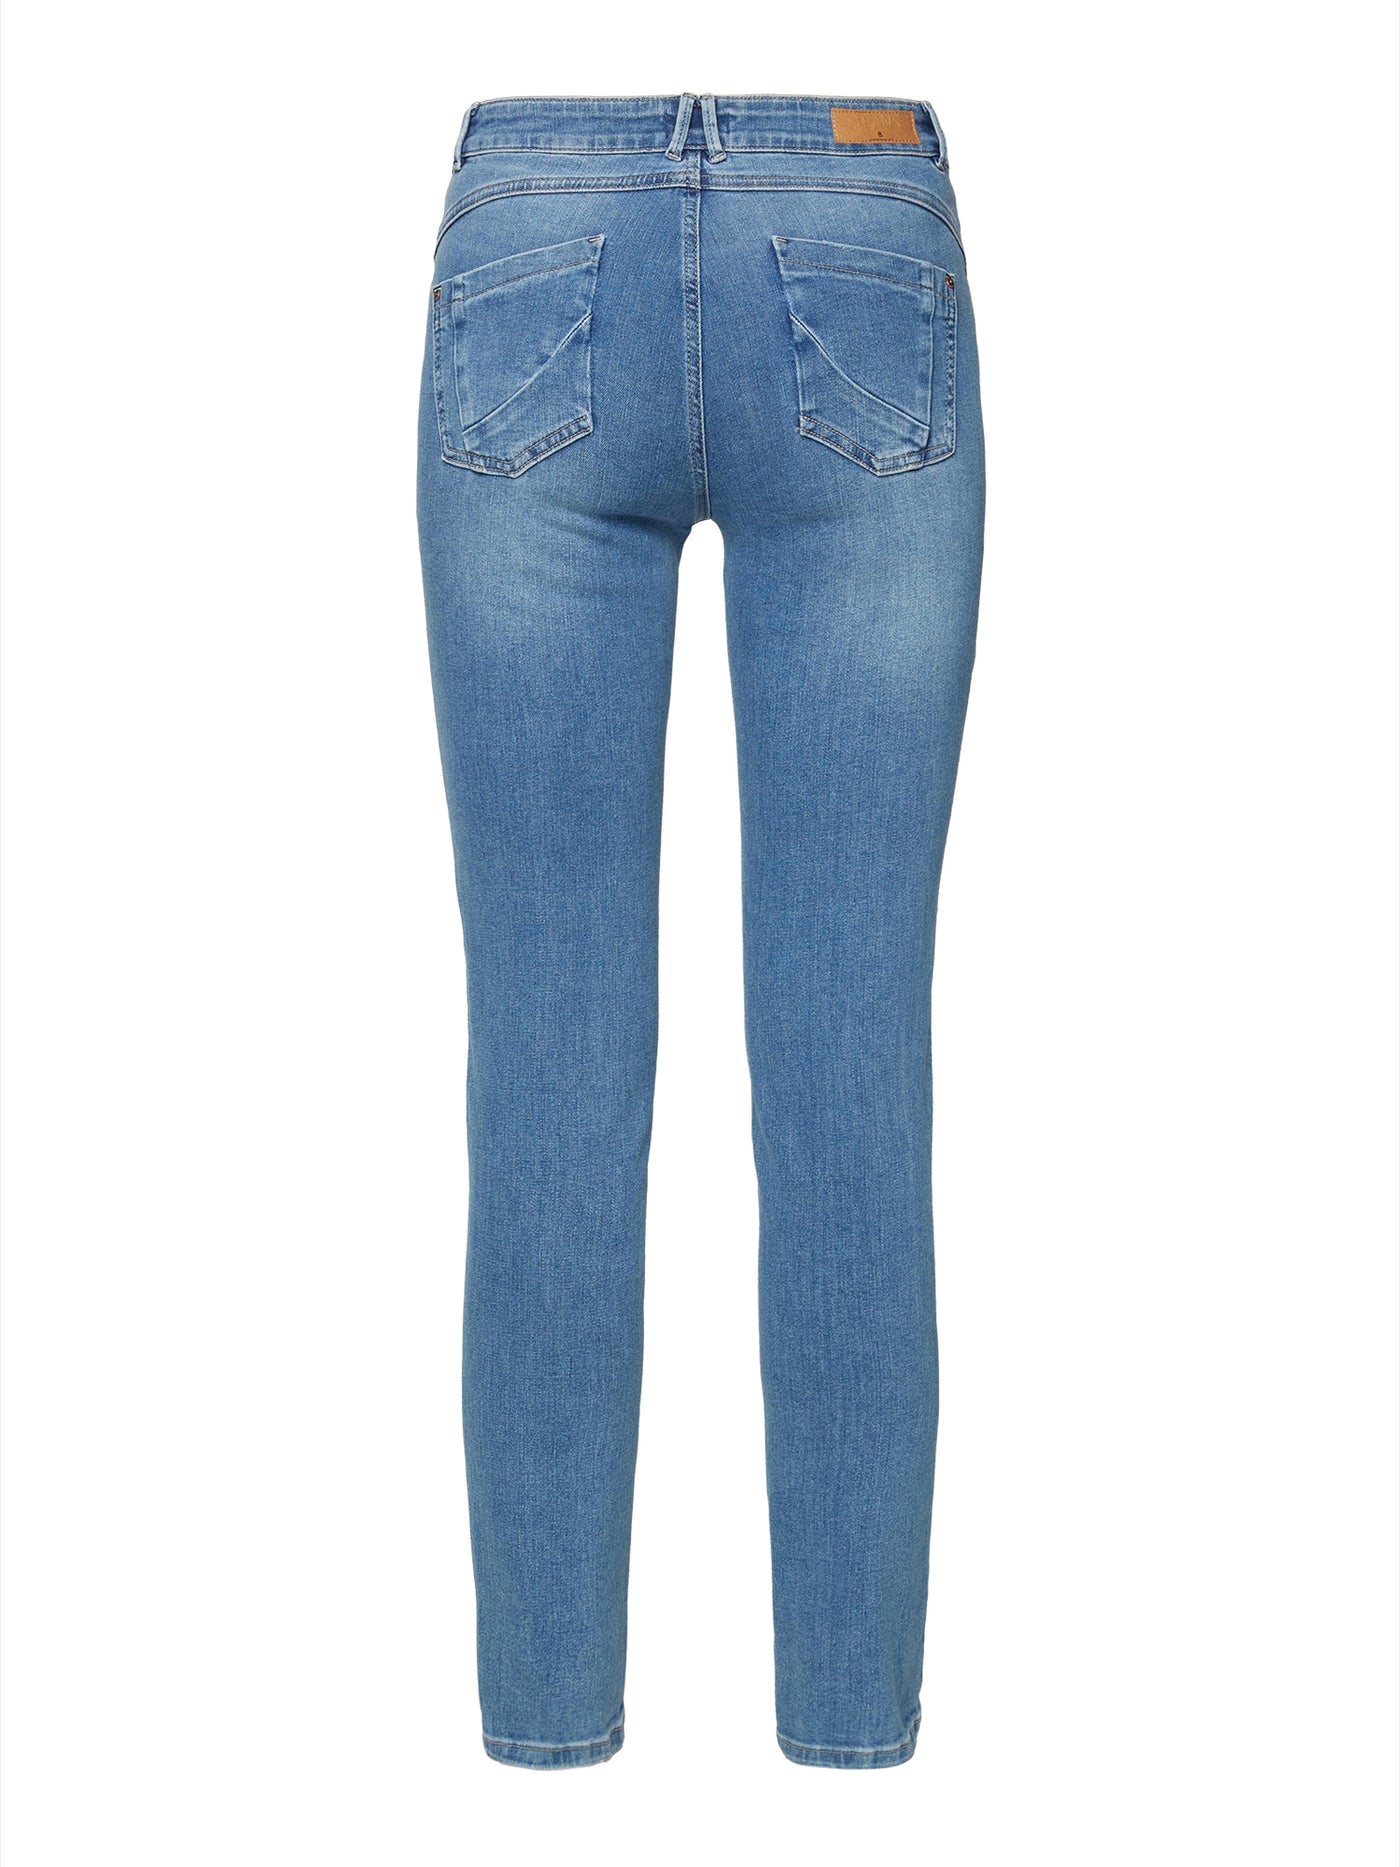 Jeans Maggie Narrow Legs - Light Blue Denim